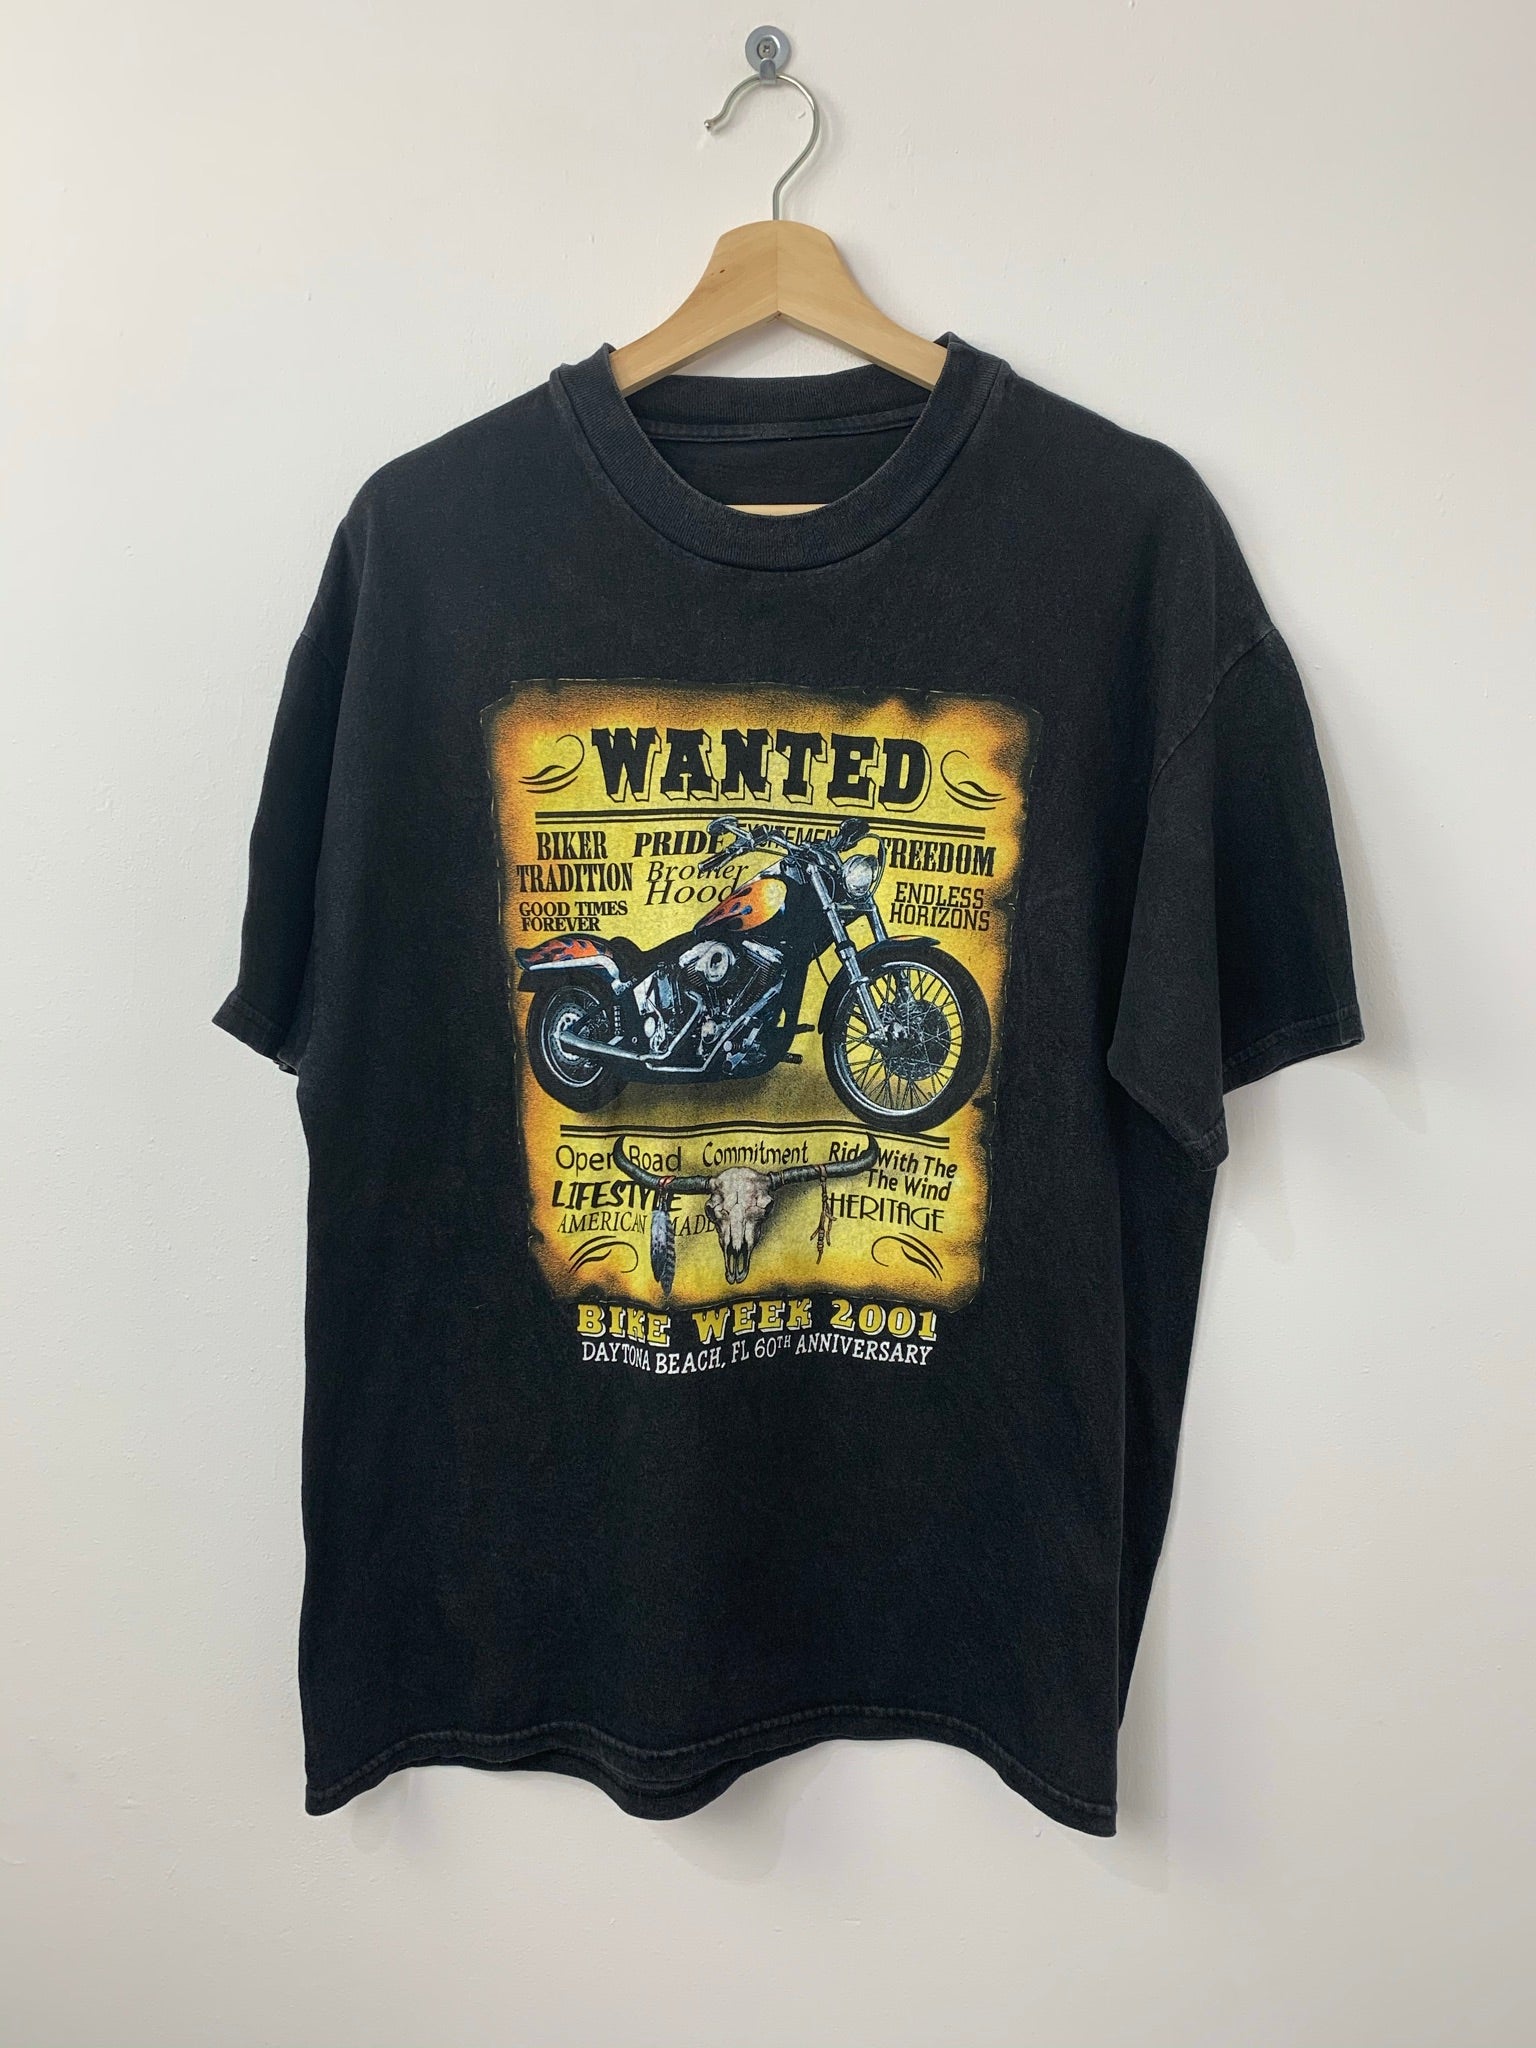 Vintage Bike Week 2001 Daytona Beach Florida T-Shirt – Deadbeat